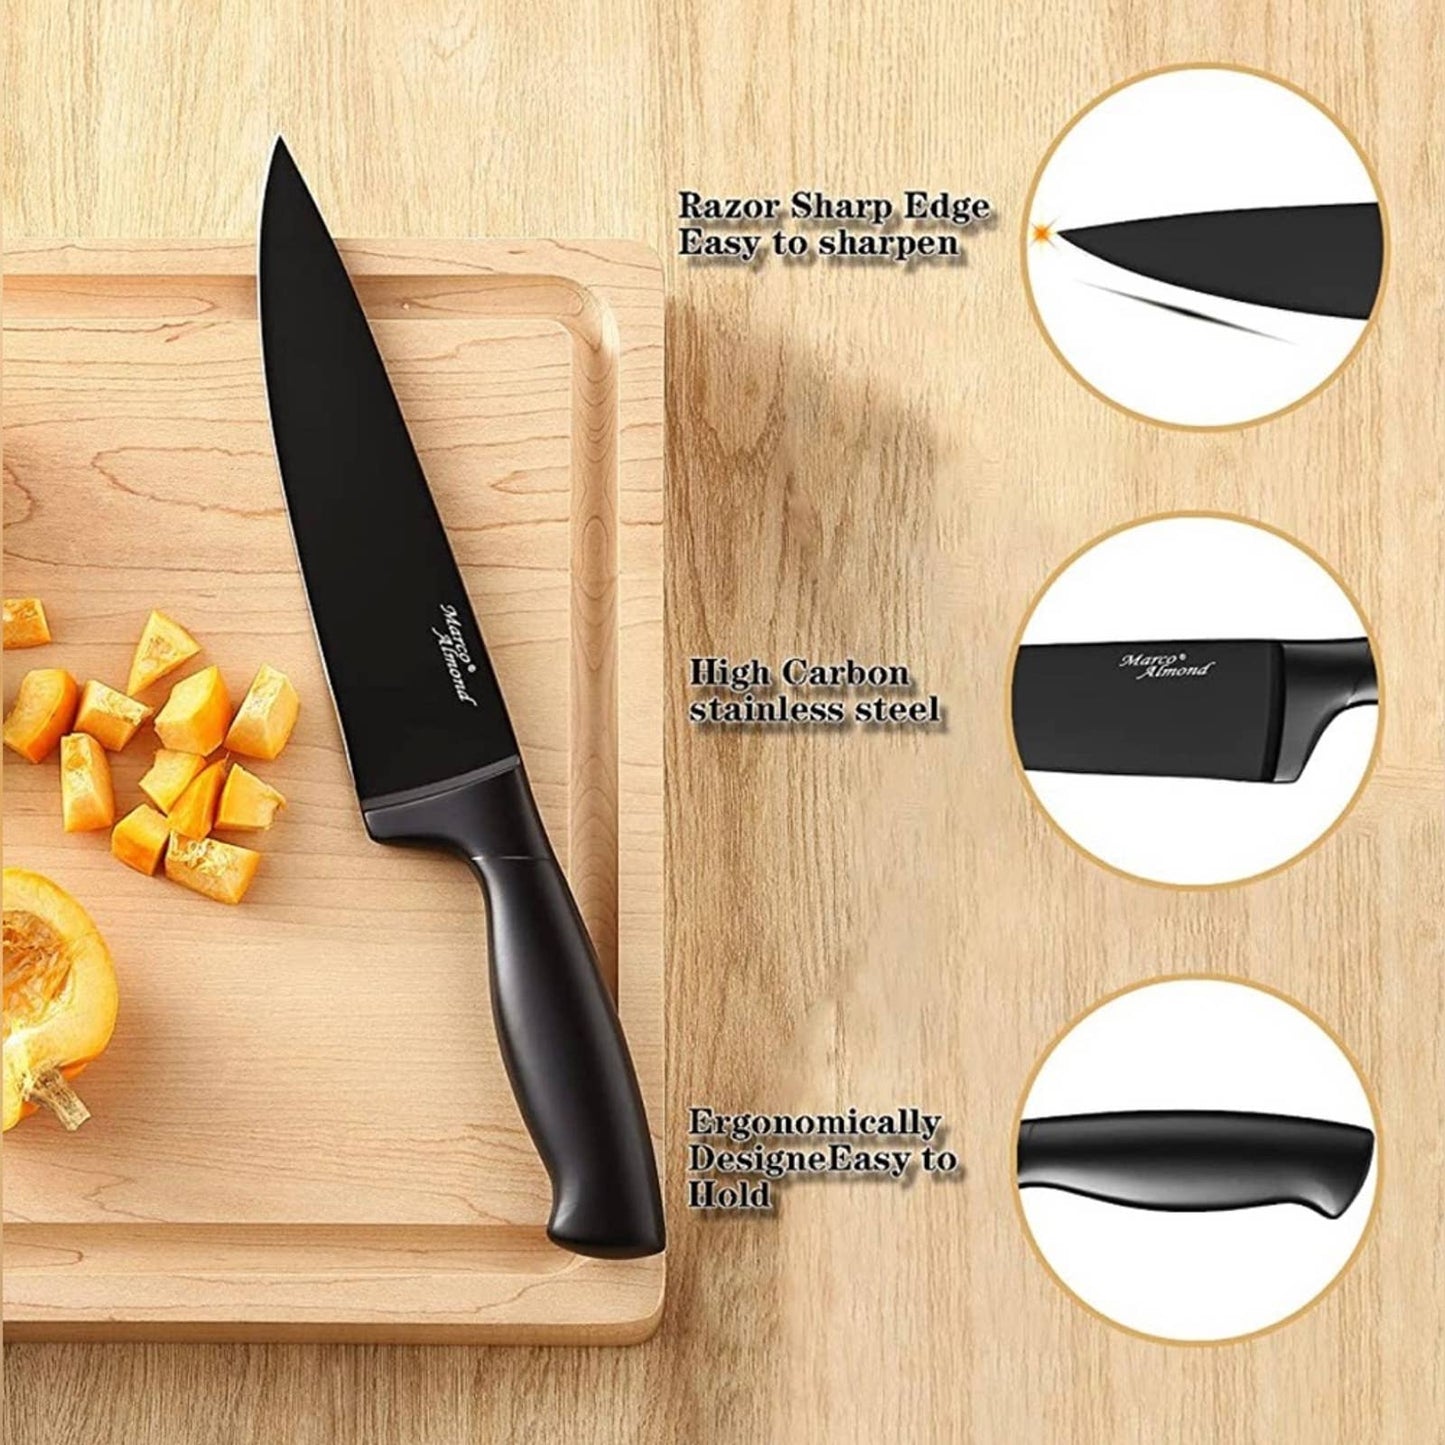 Marco Almond® Dishwasher Safe MA23 Black Kitchen Knife Set, 17 Pieces Stainless